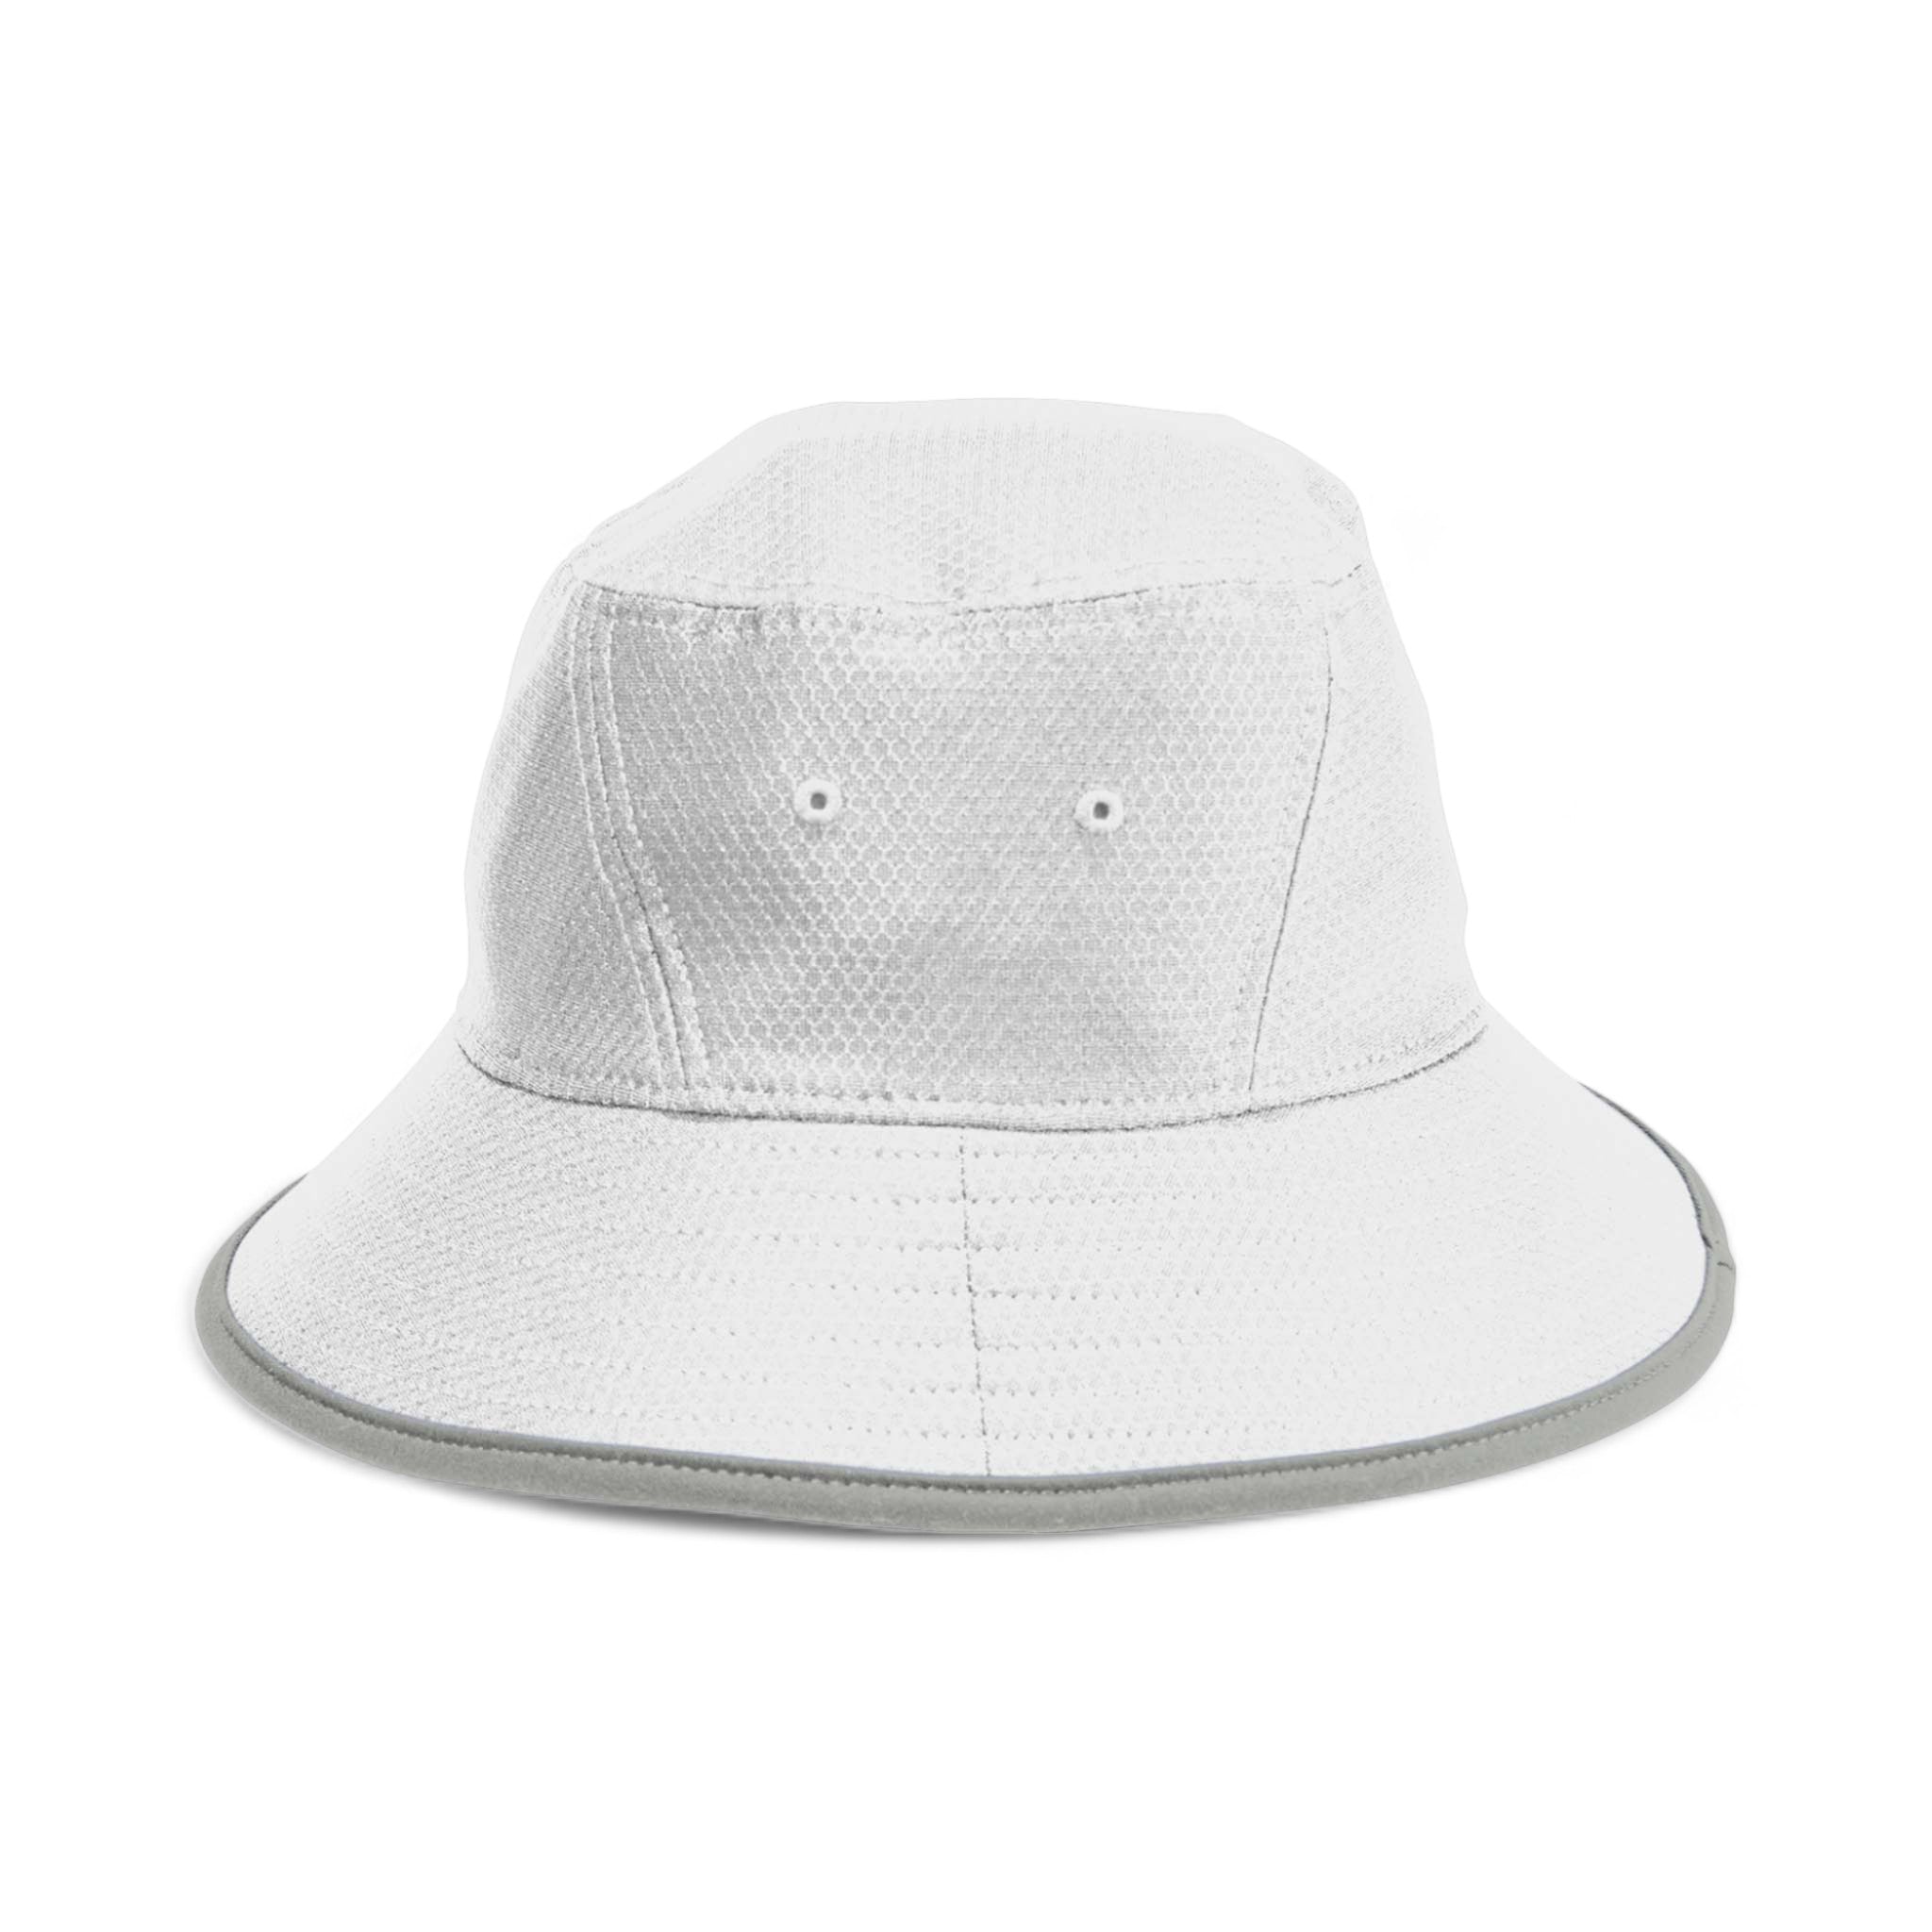 Front view of New Era NE800 custom hat in white and rainstorm grey